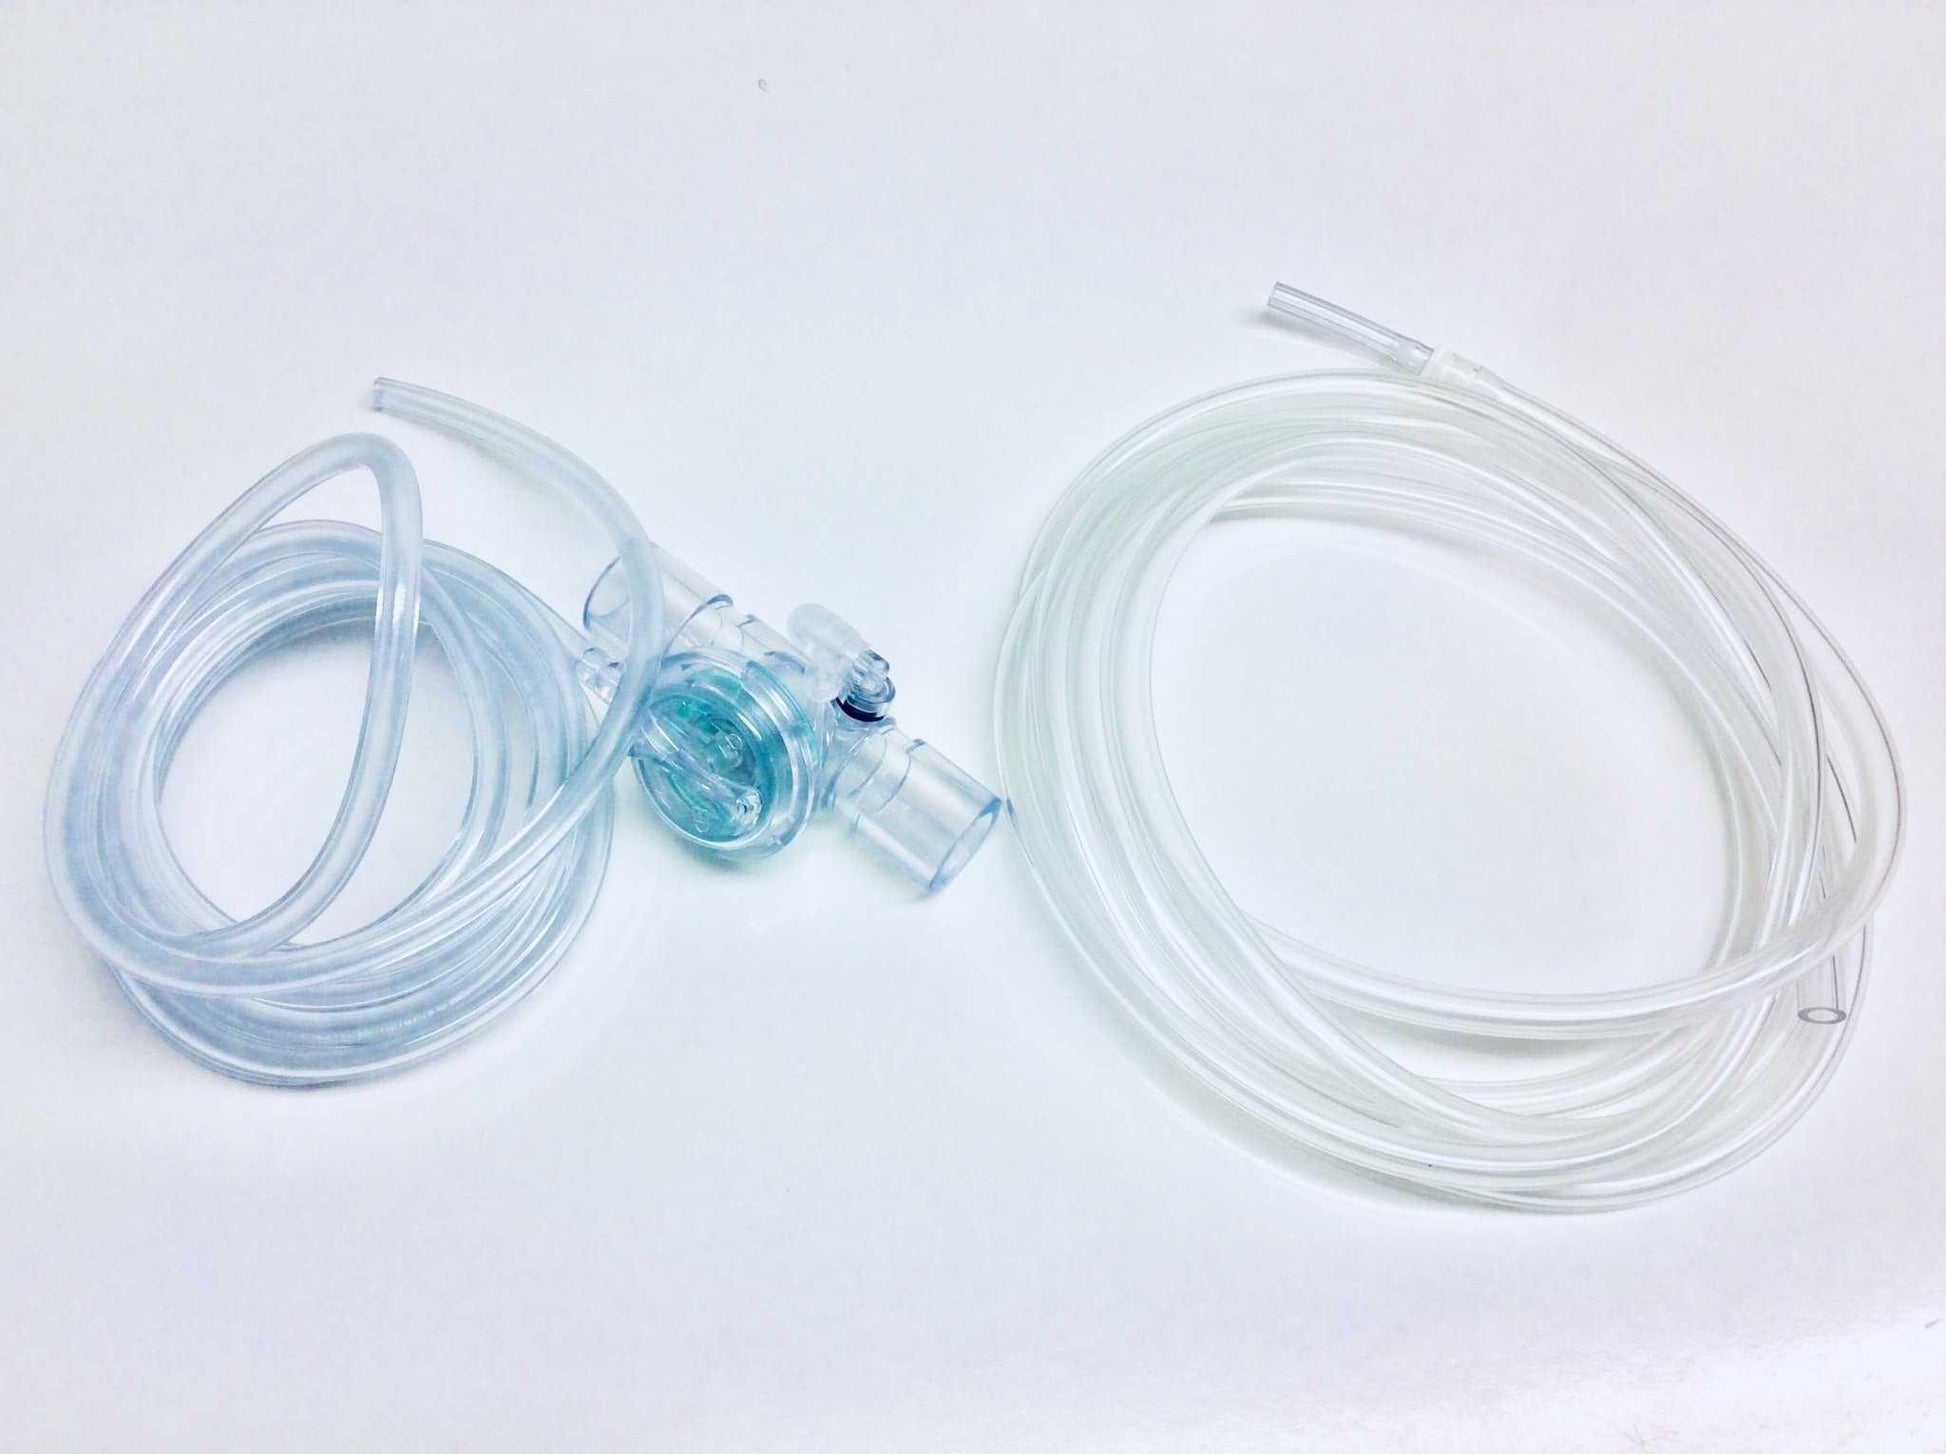 NEW Philips Respironics Active Exhalation Valve UPB Kit 1075459 FREE Shipping - MBR Medicals